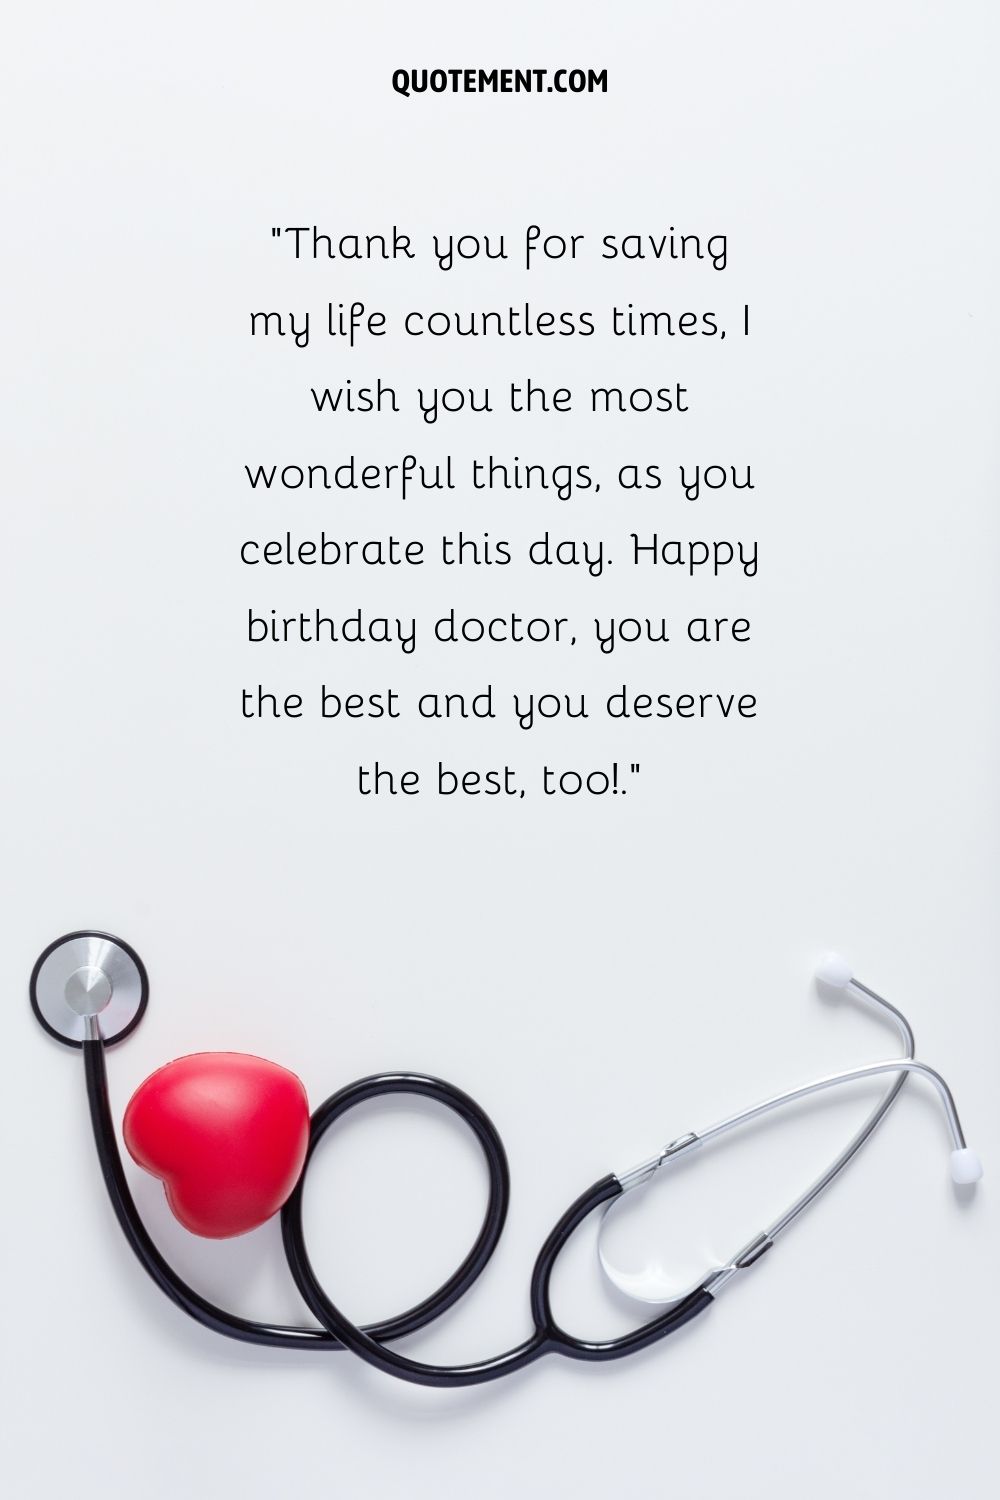 estetoscopio rizado que representa un deseo de cumpleaños para un médico